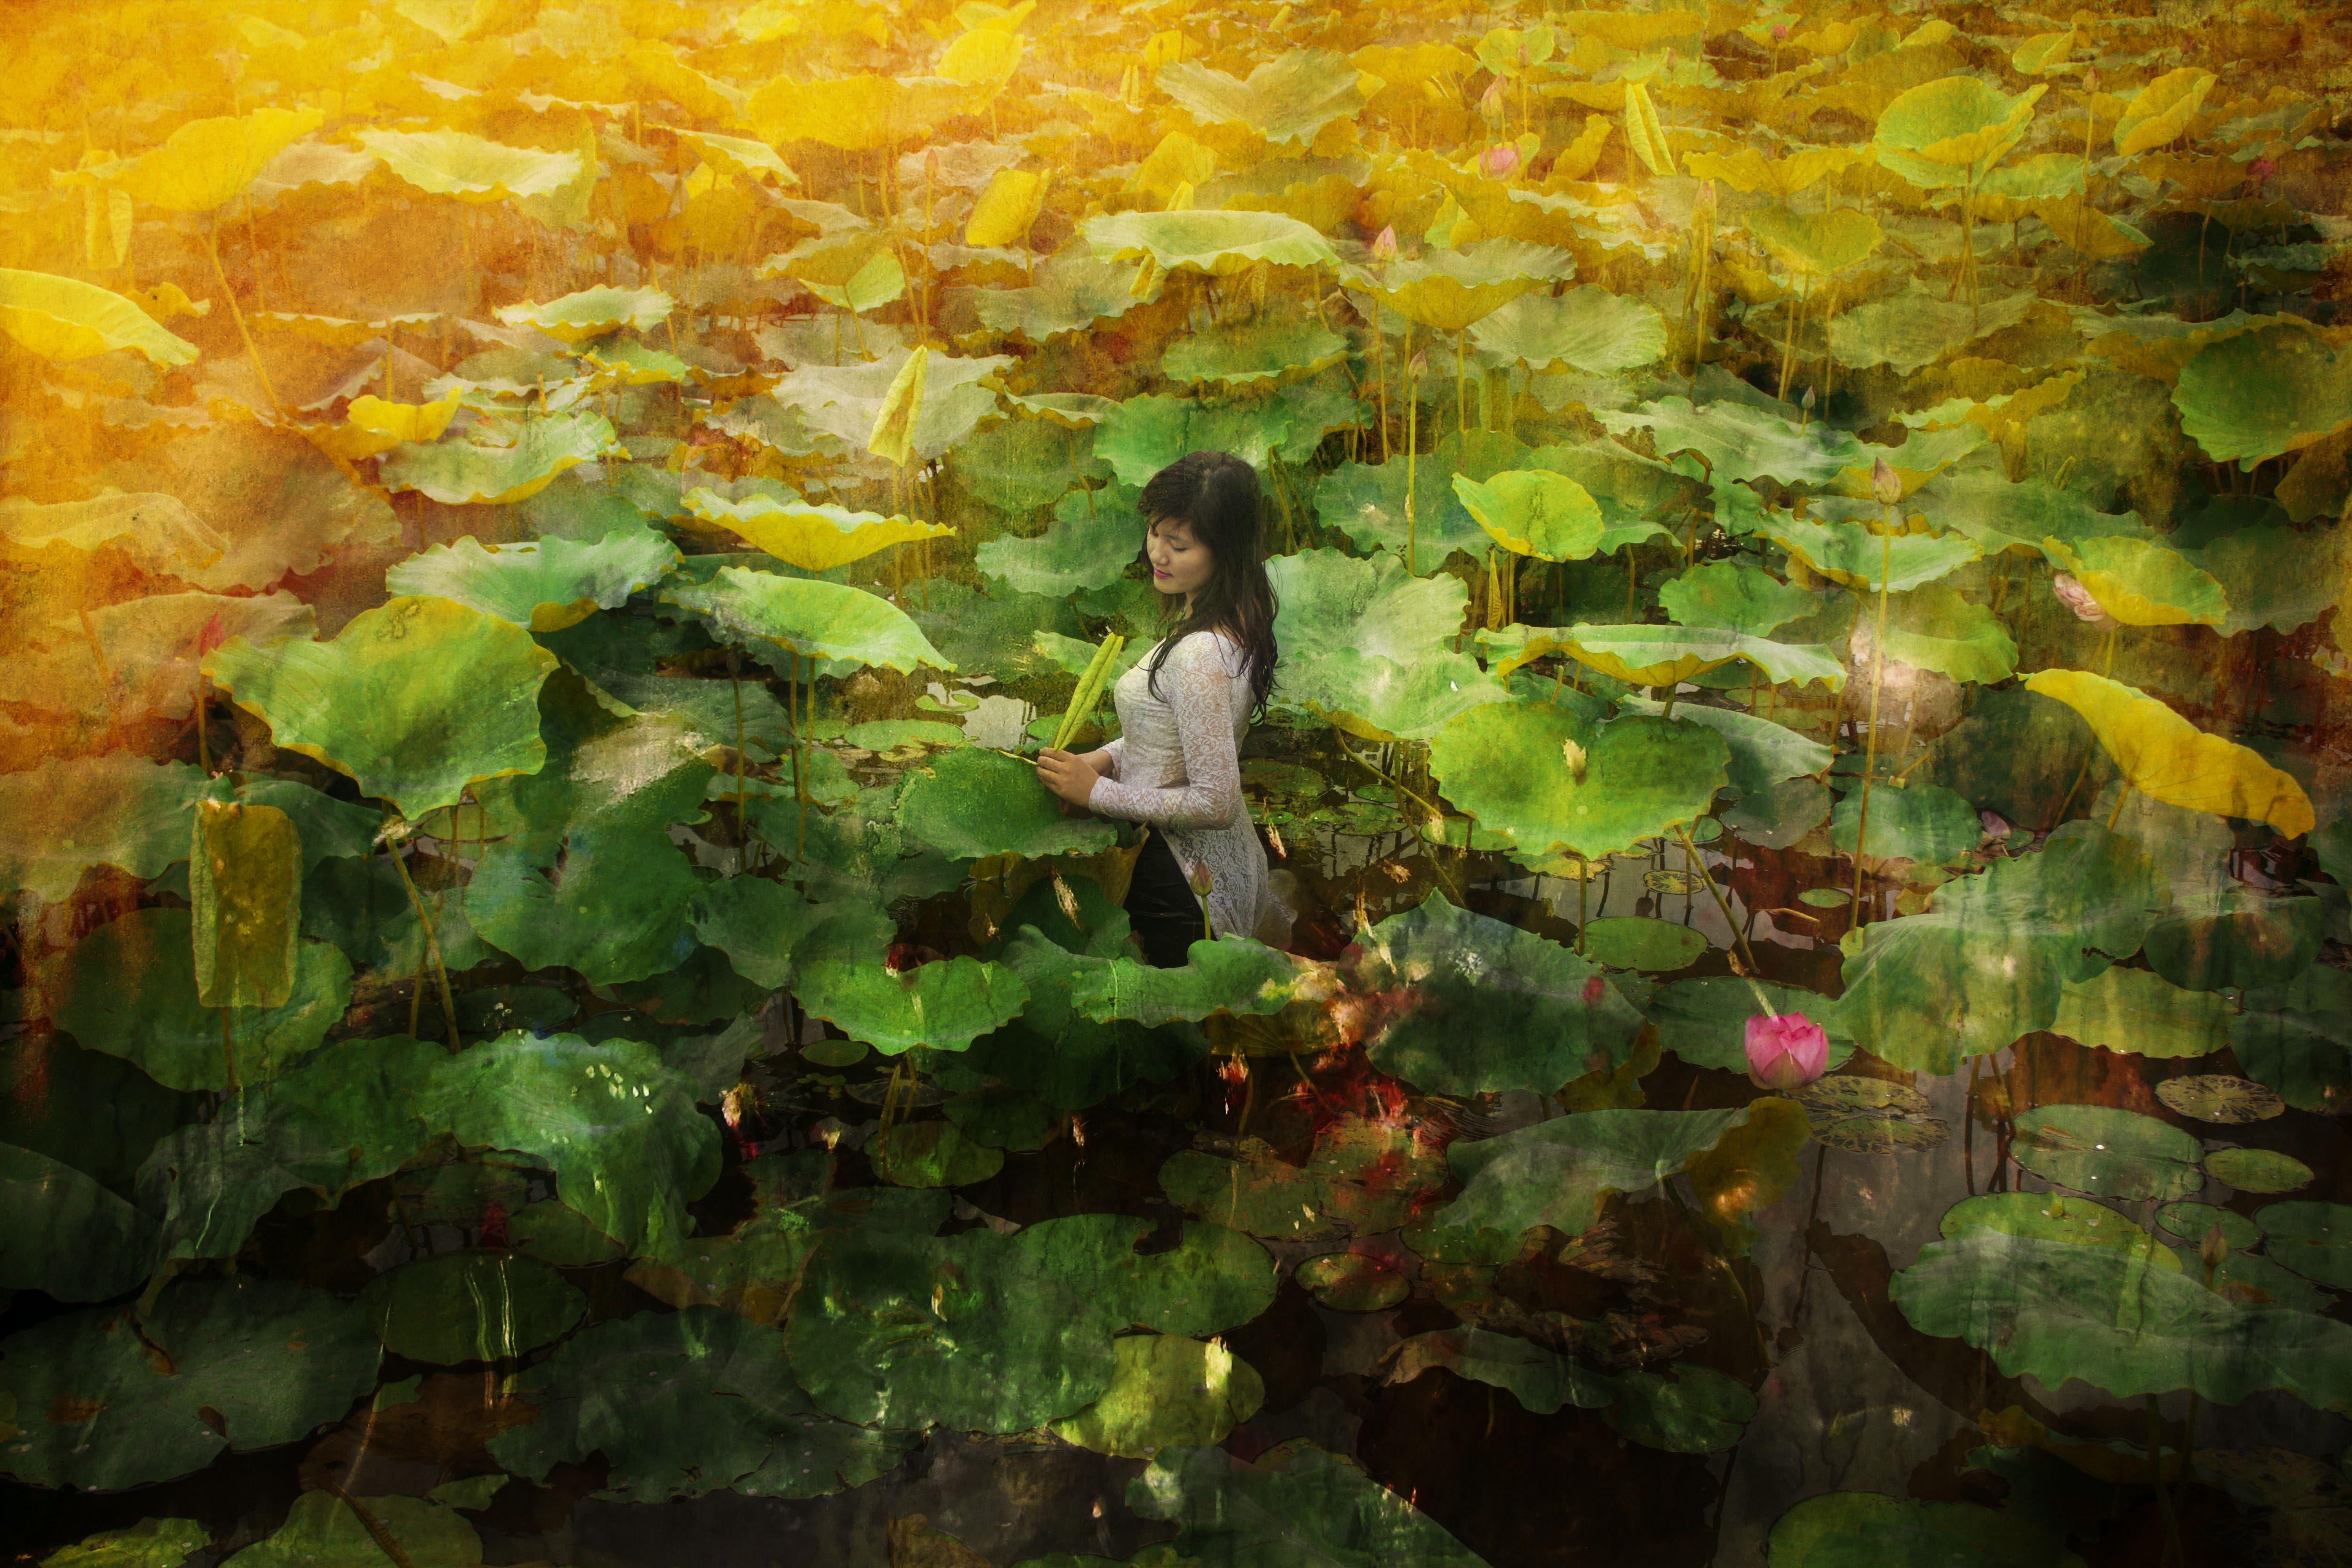 Viet Ha Tran Color Photograph - The lotus song, Photograph, C-Type